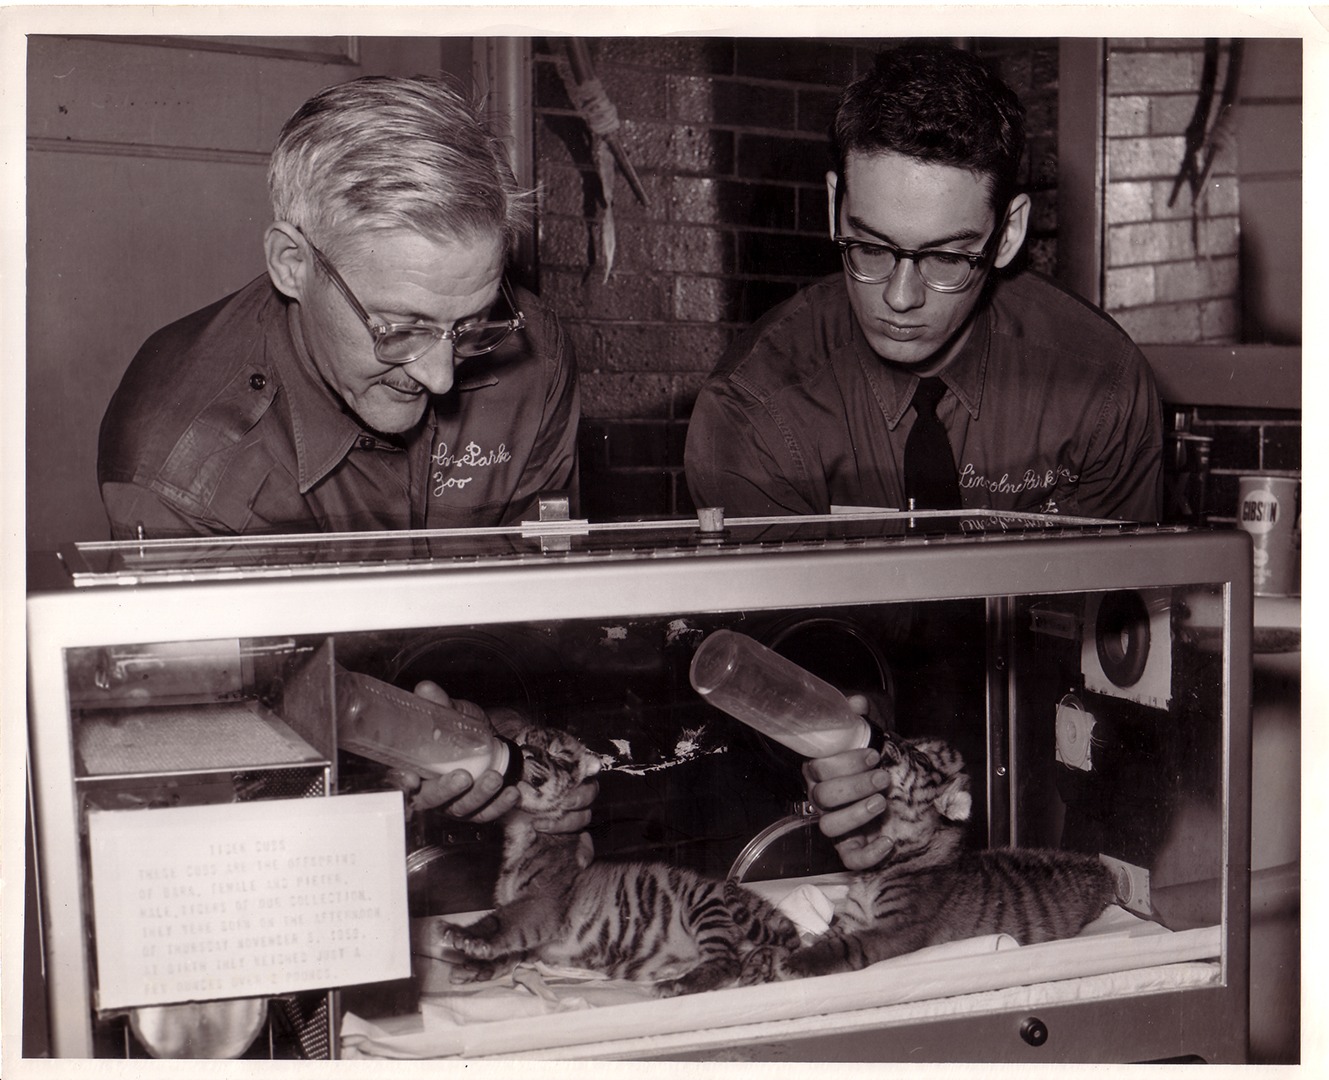 Senior keeper Bill Fettke & Zoologist Don Nickon feeding tigers